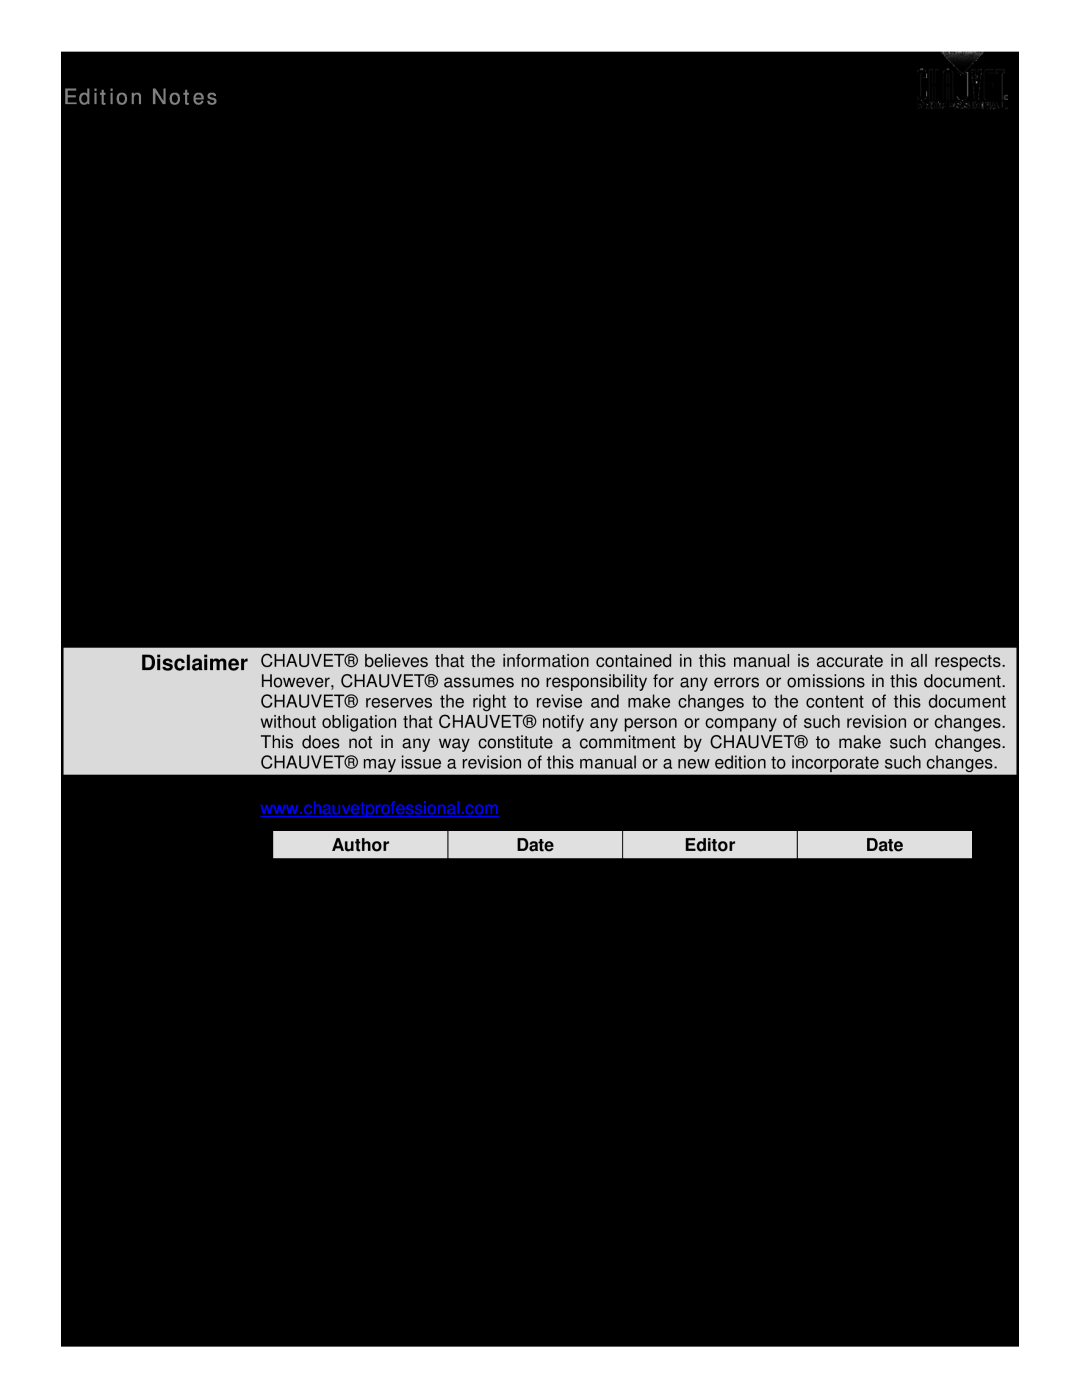 Chauvet Legend 412Z user manual Edition Notes, Disclaimer, Document, Revision 